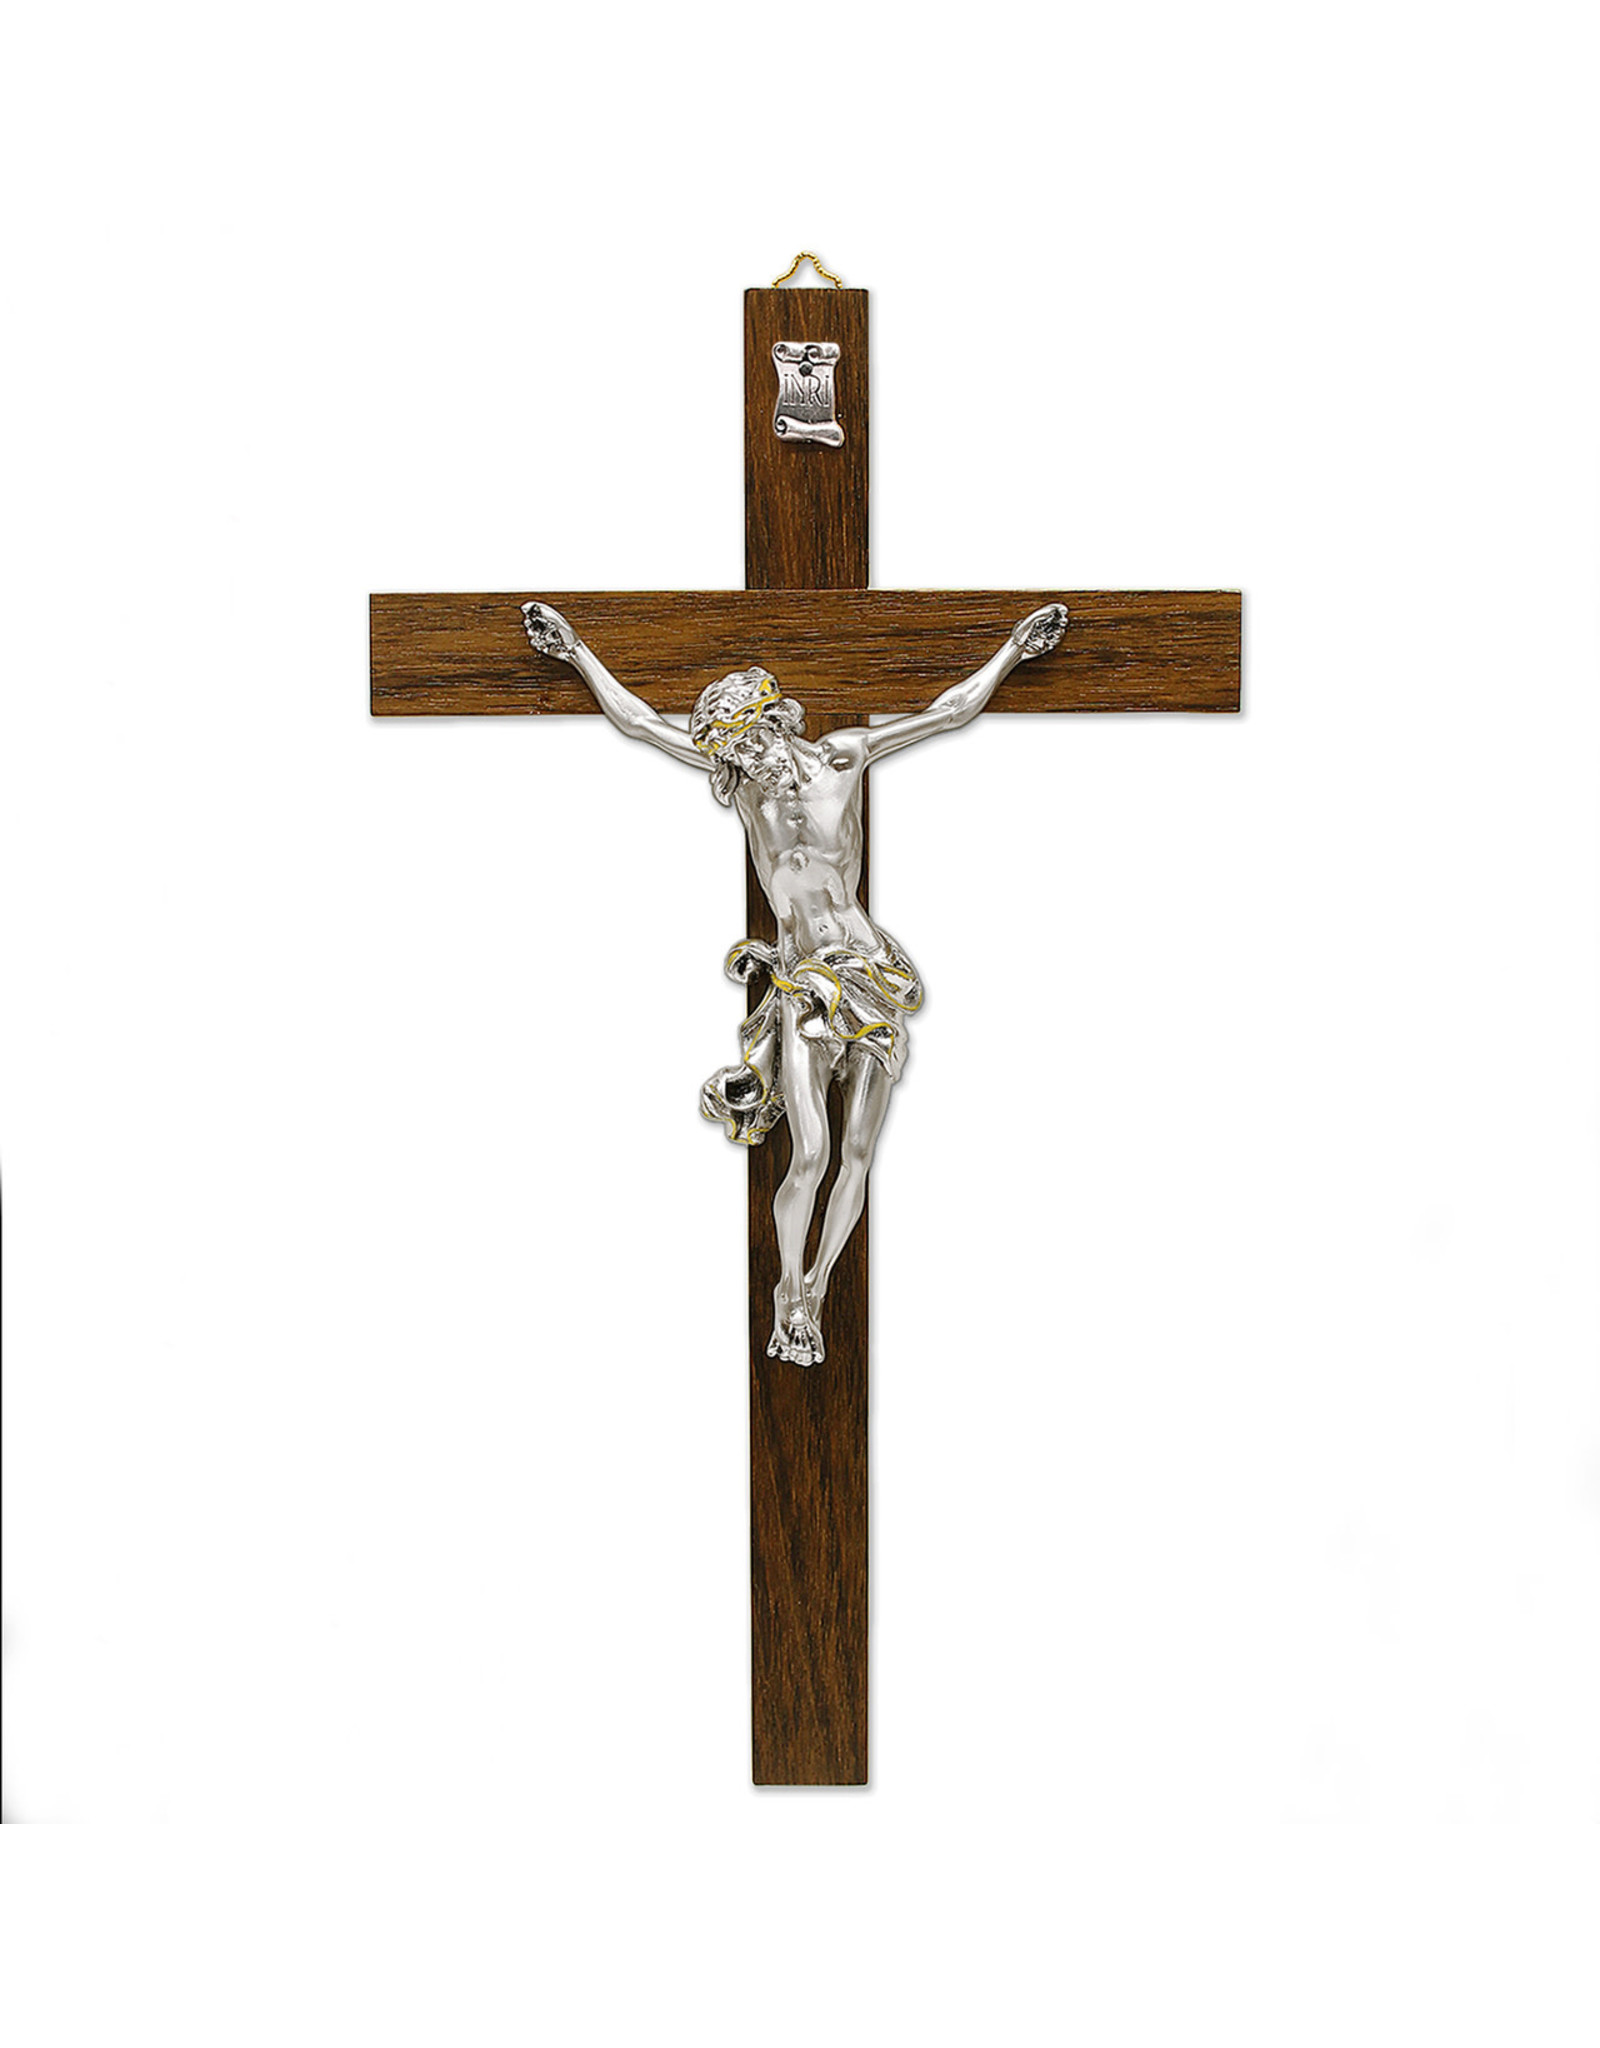 Lumen Mundi 10-1/2" Dark- Wood Wall Crucifix with Silver Plated Corpus